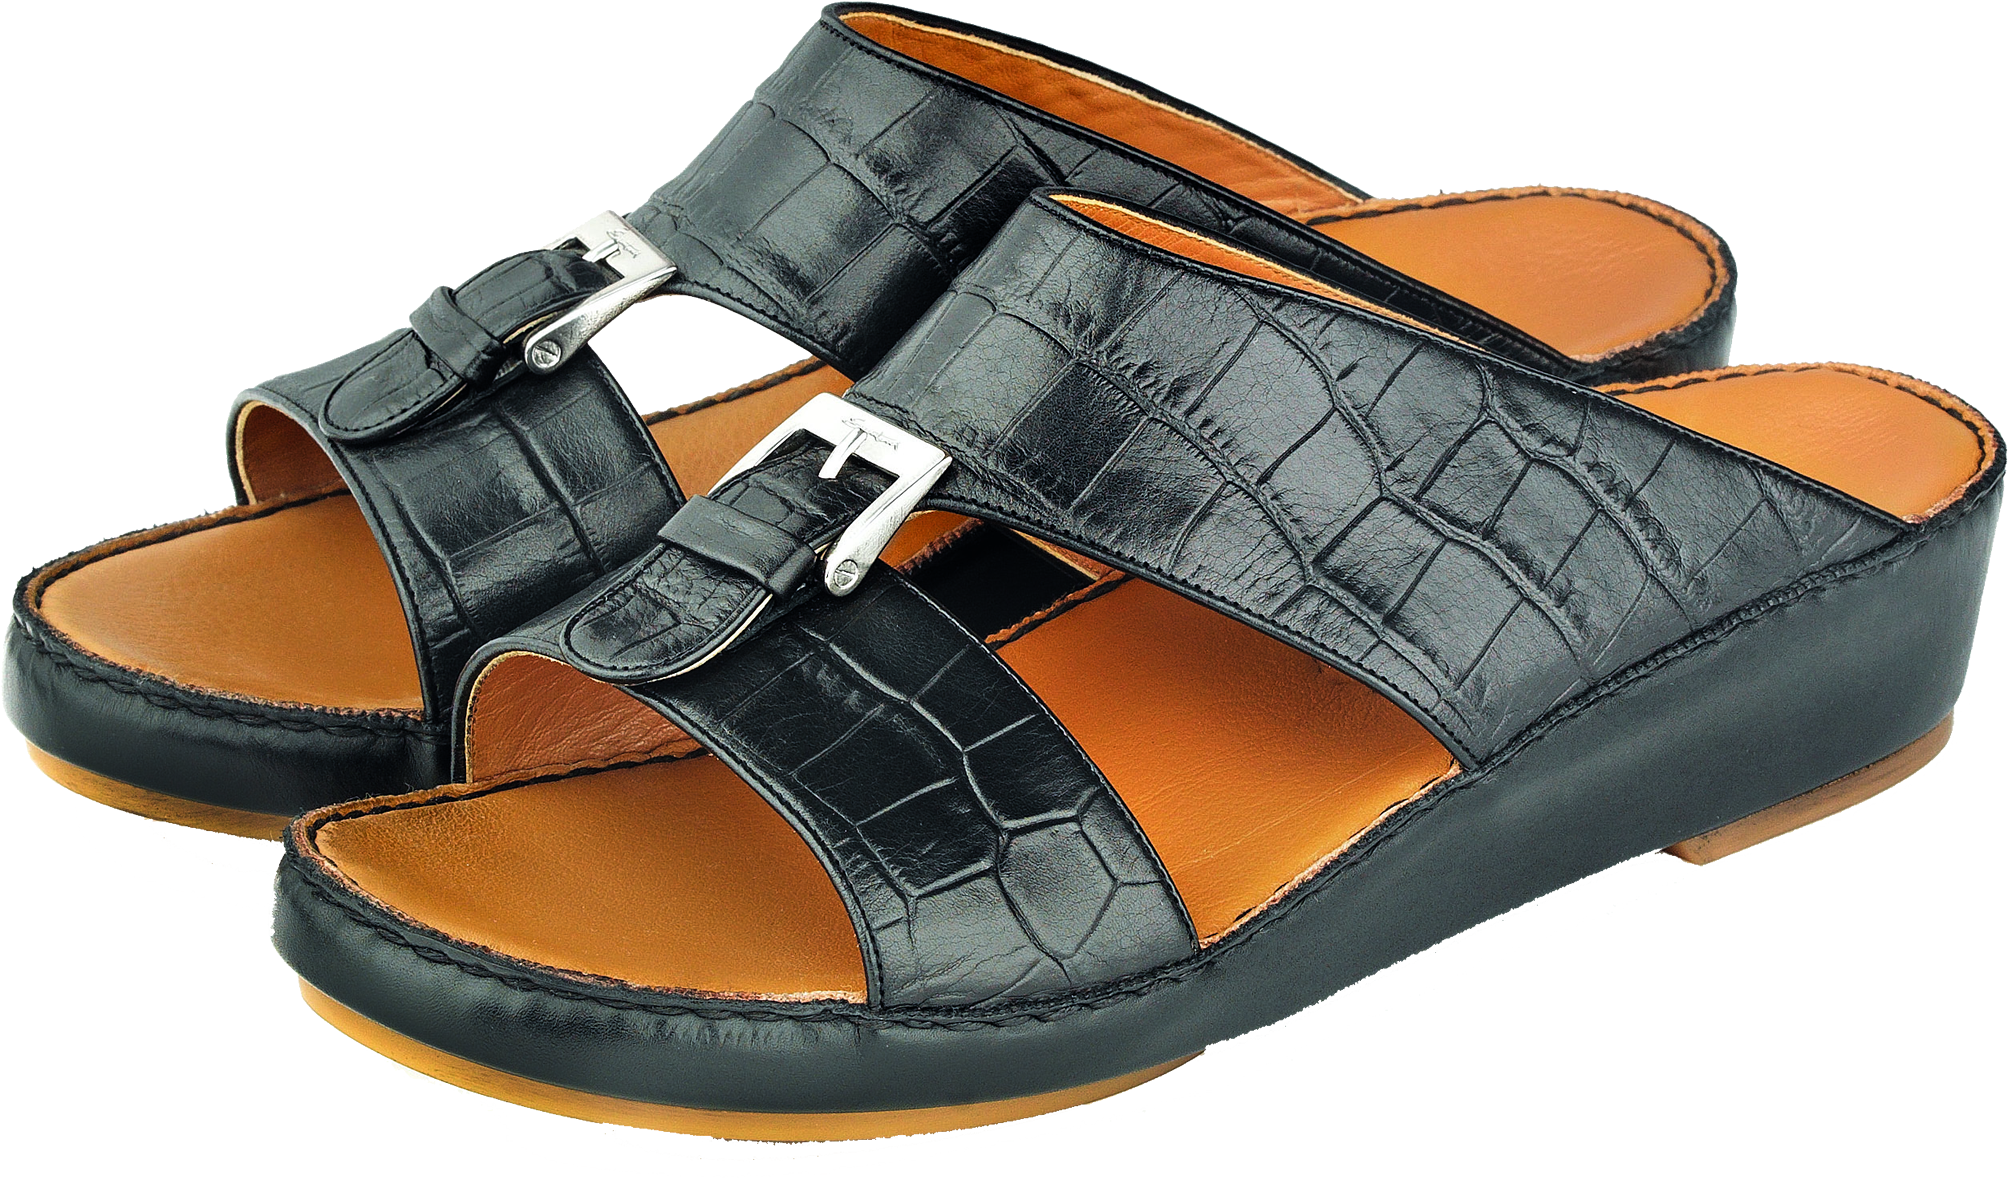 Leather Sandals Png Image - Sandal, Transparent background PNG HD thumbnail